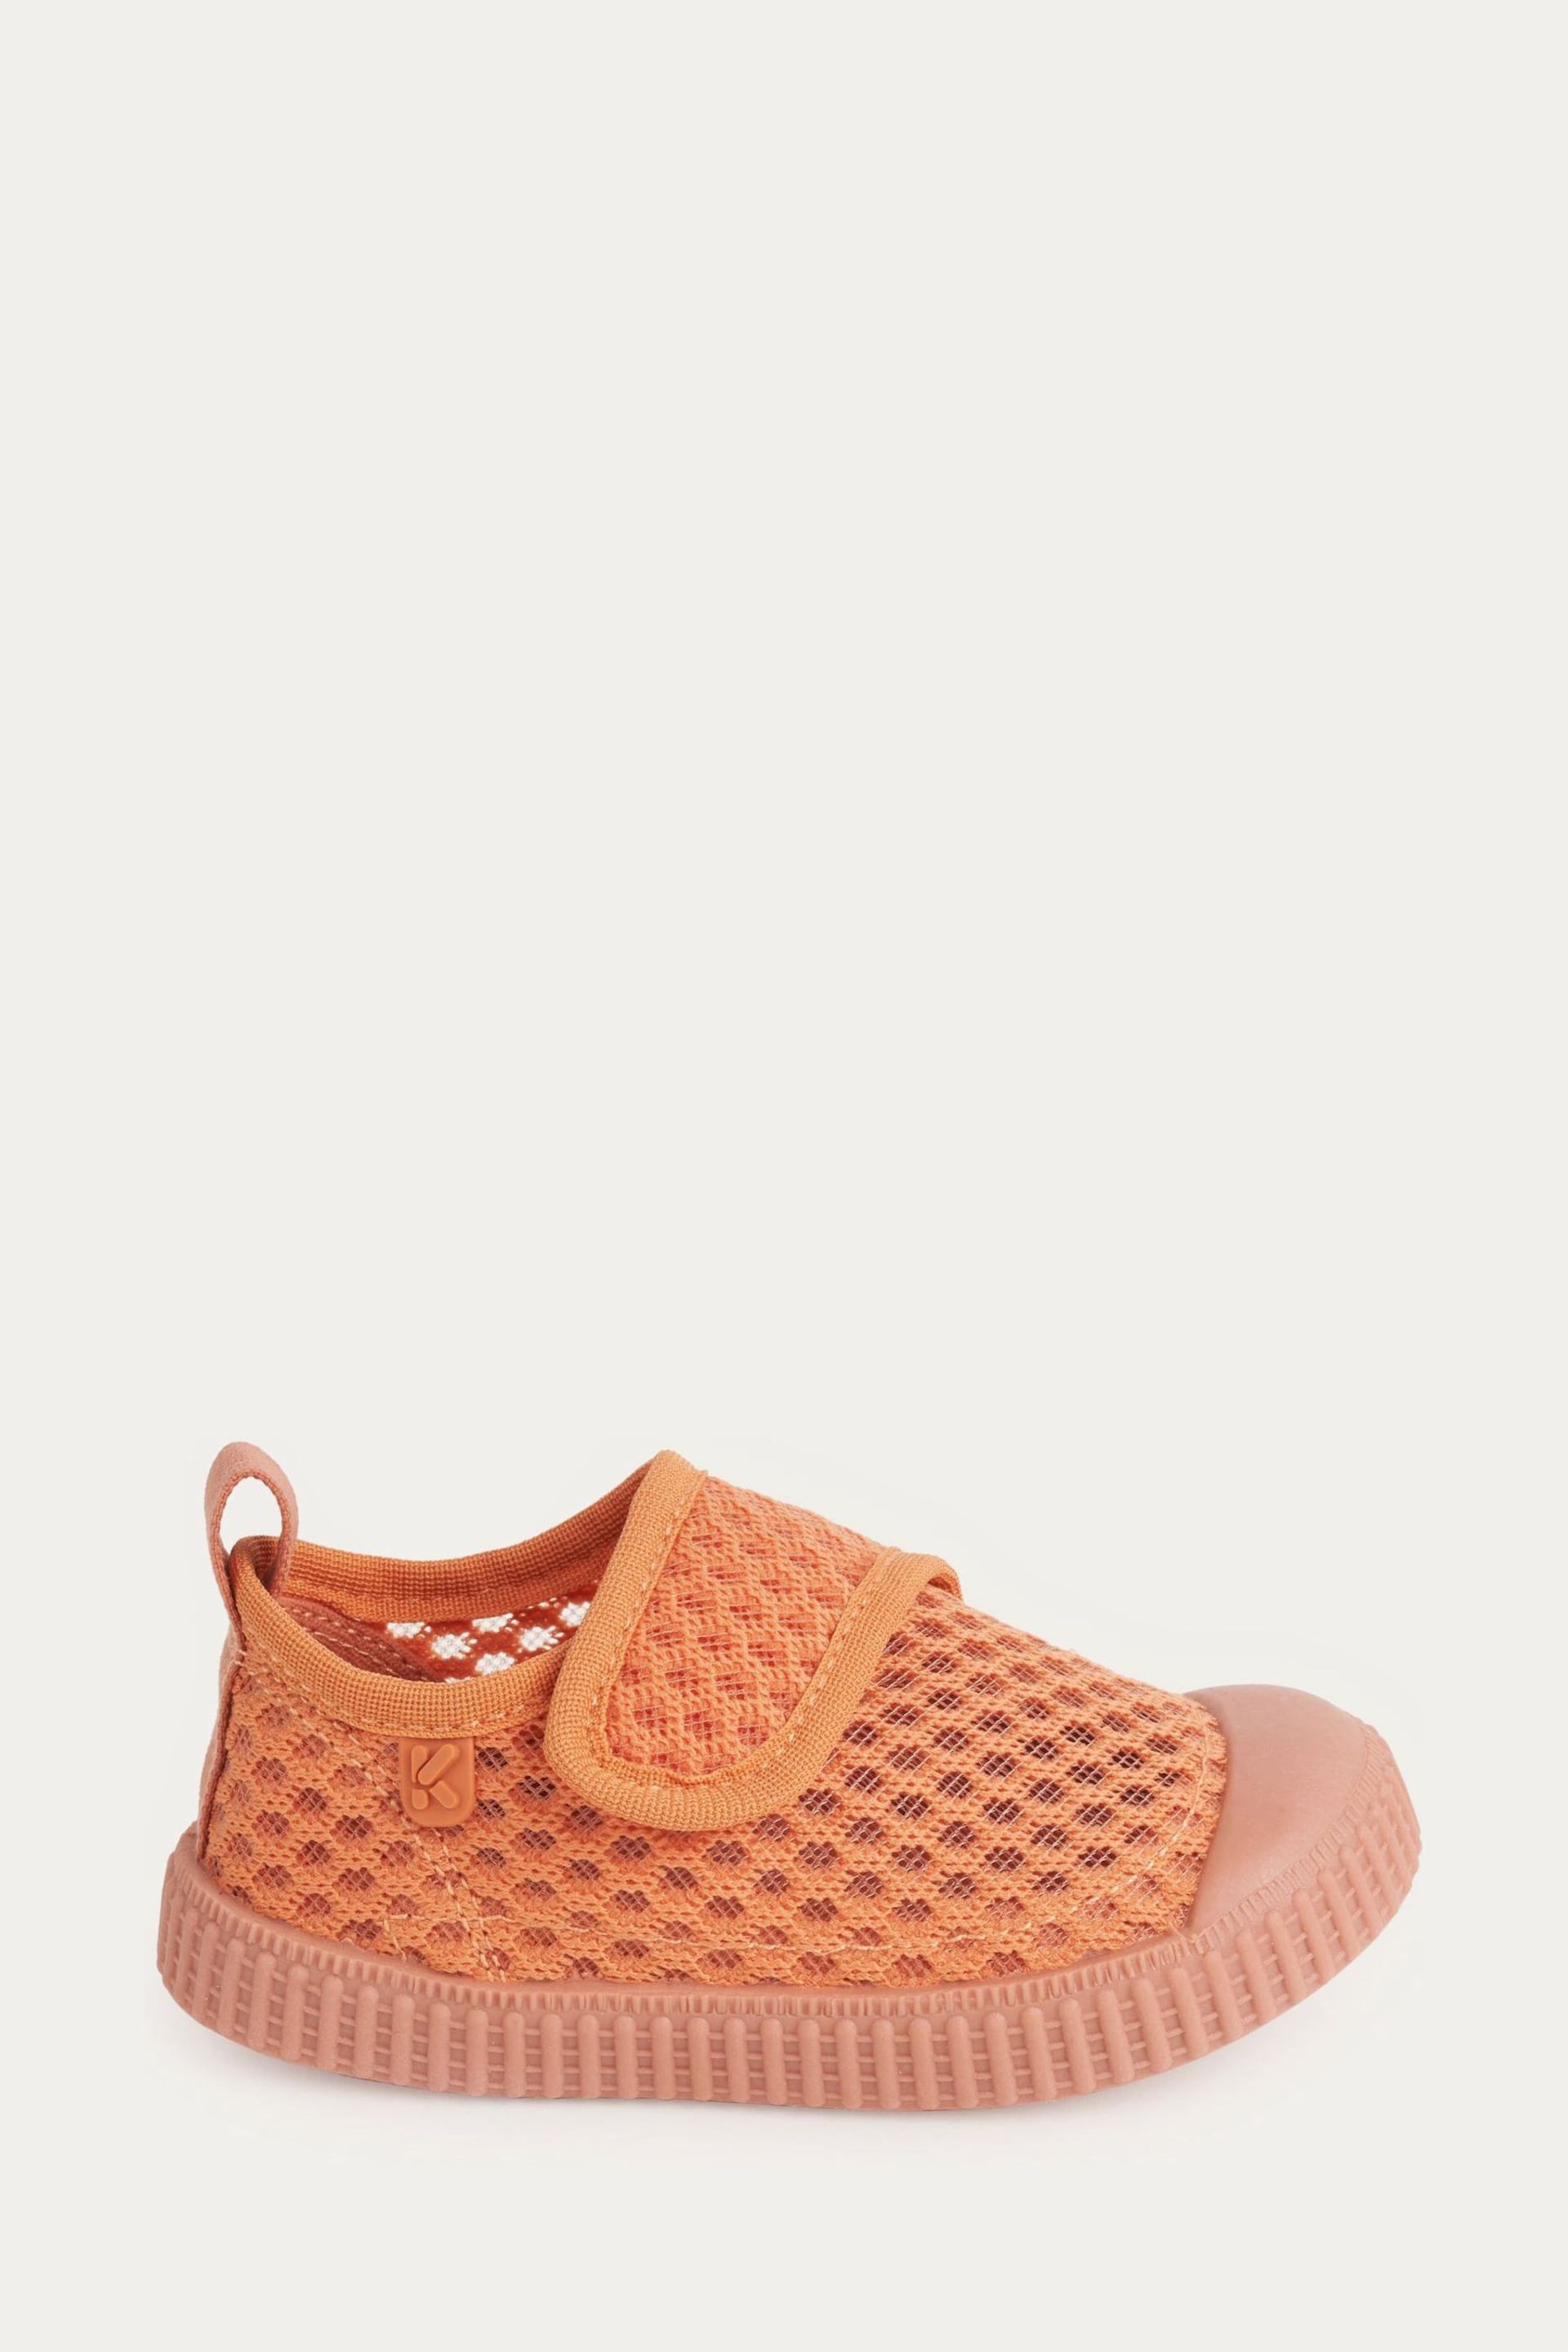 KIDLY Orange Mesh Swim Shoes - Image 2 of 4